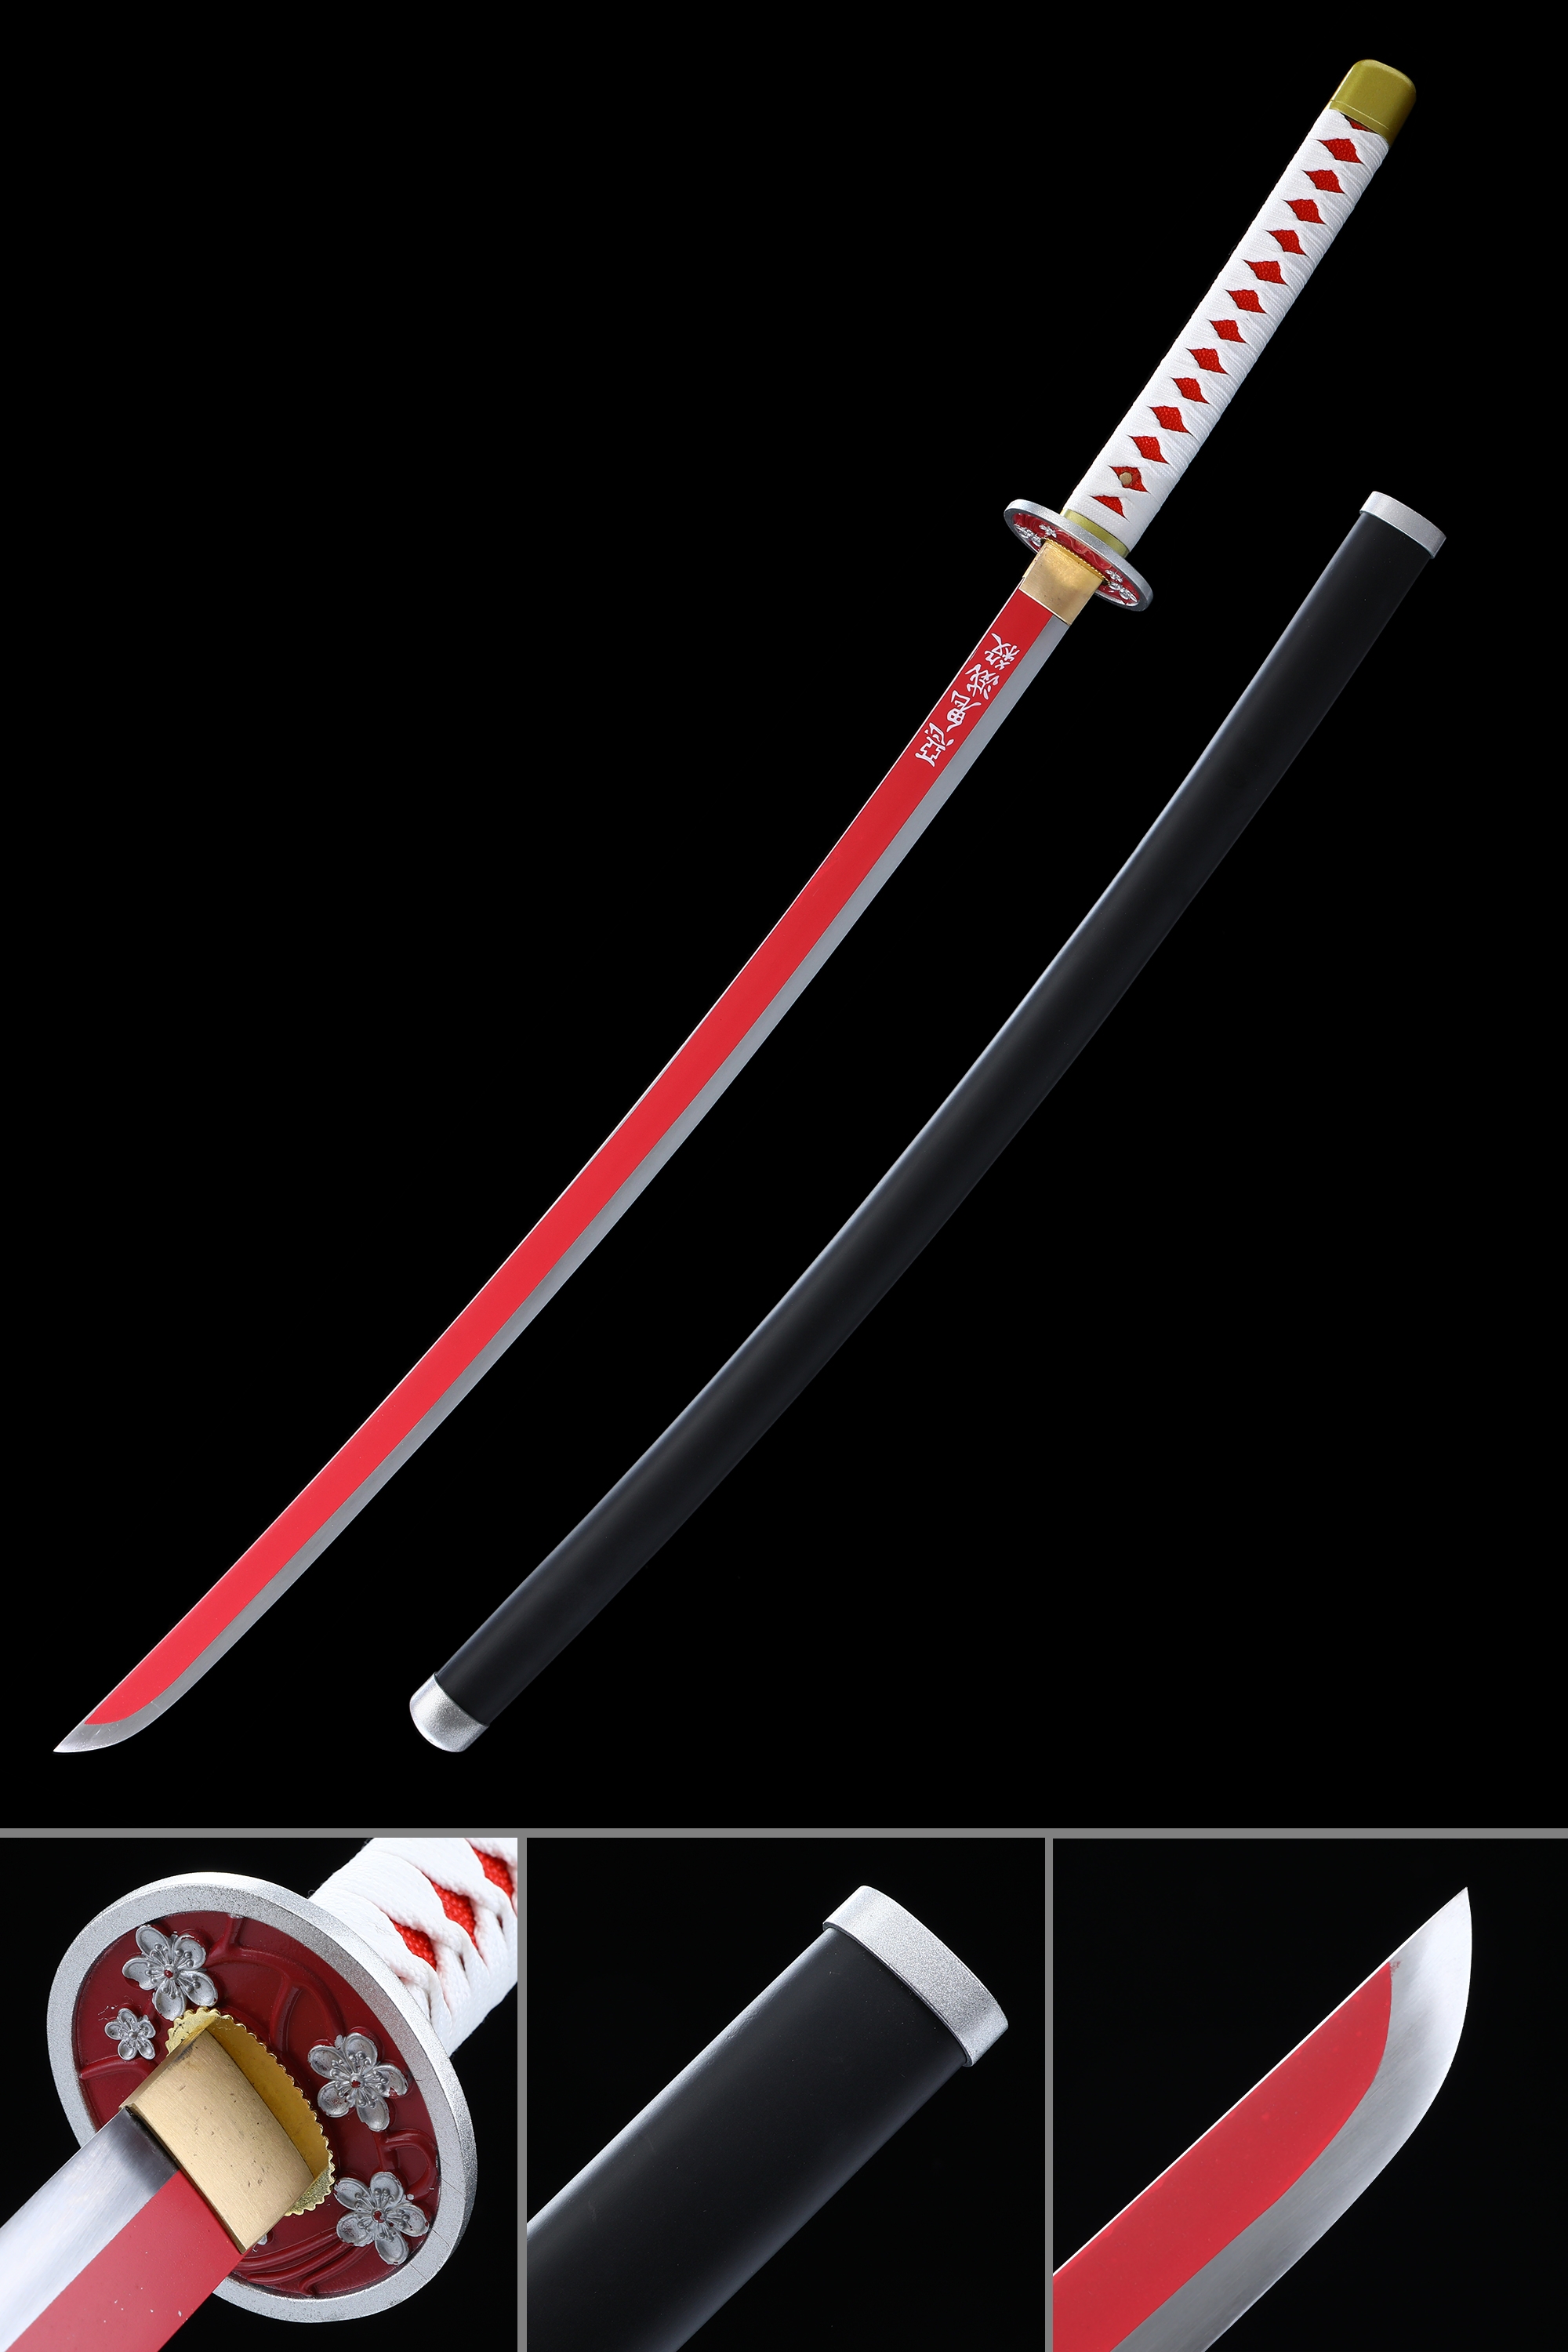 Anime Katana Sword - Perfect Replica - Comfortable Handle - Versatile -  31-inch | eBay